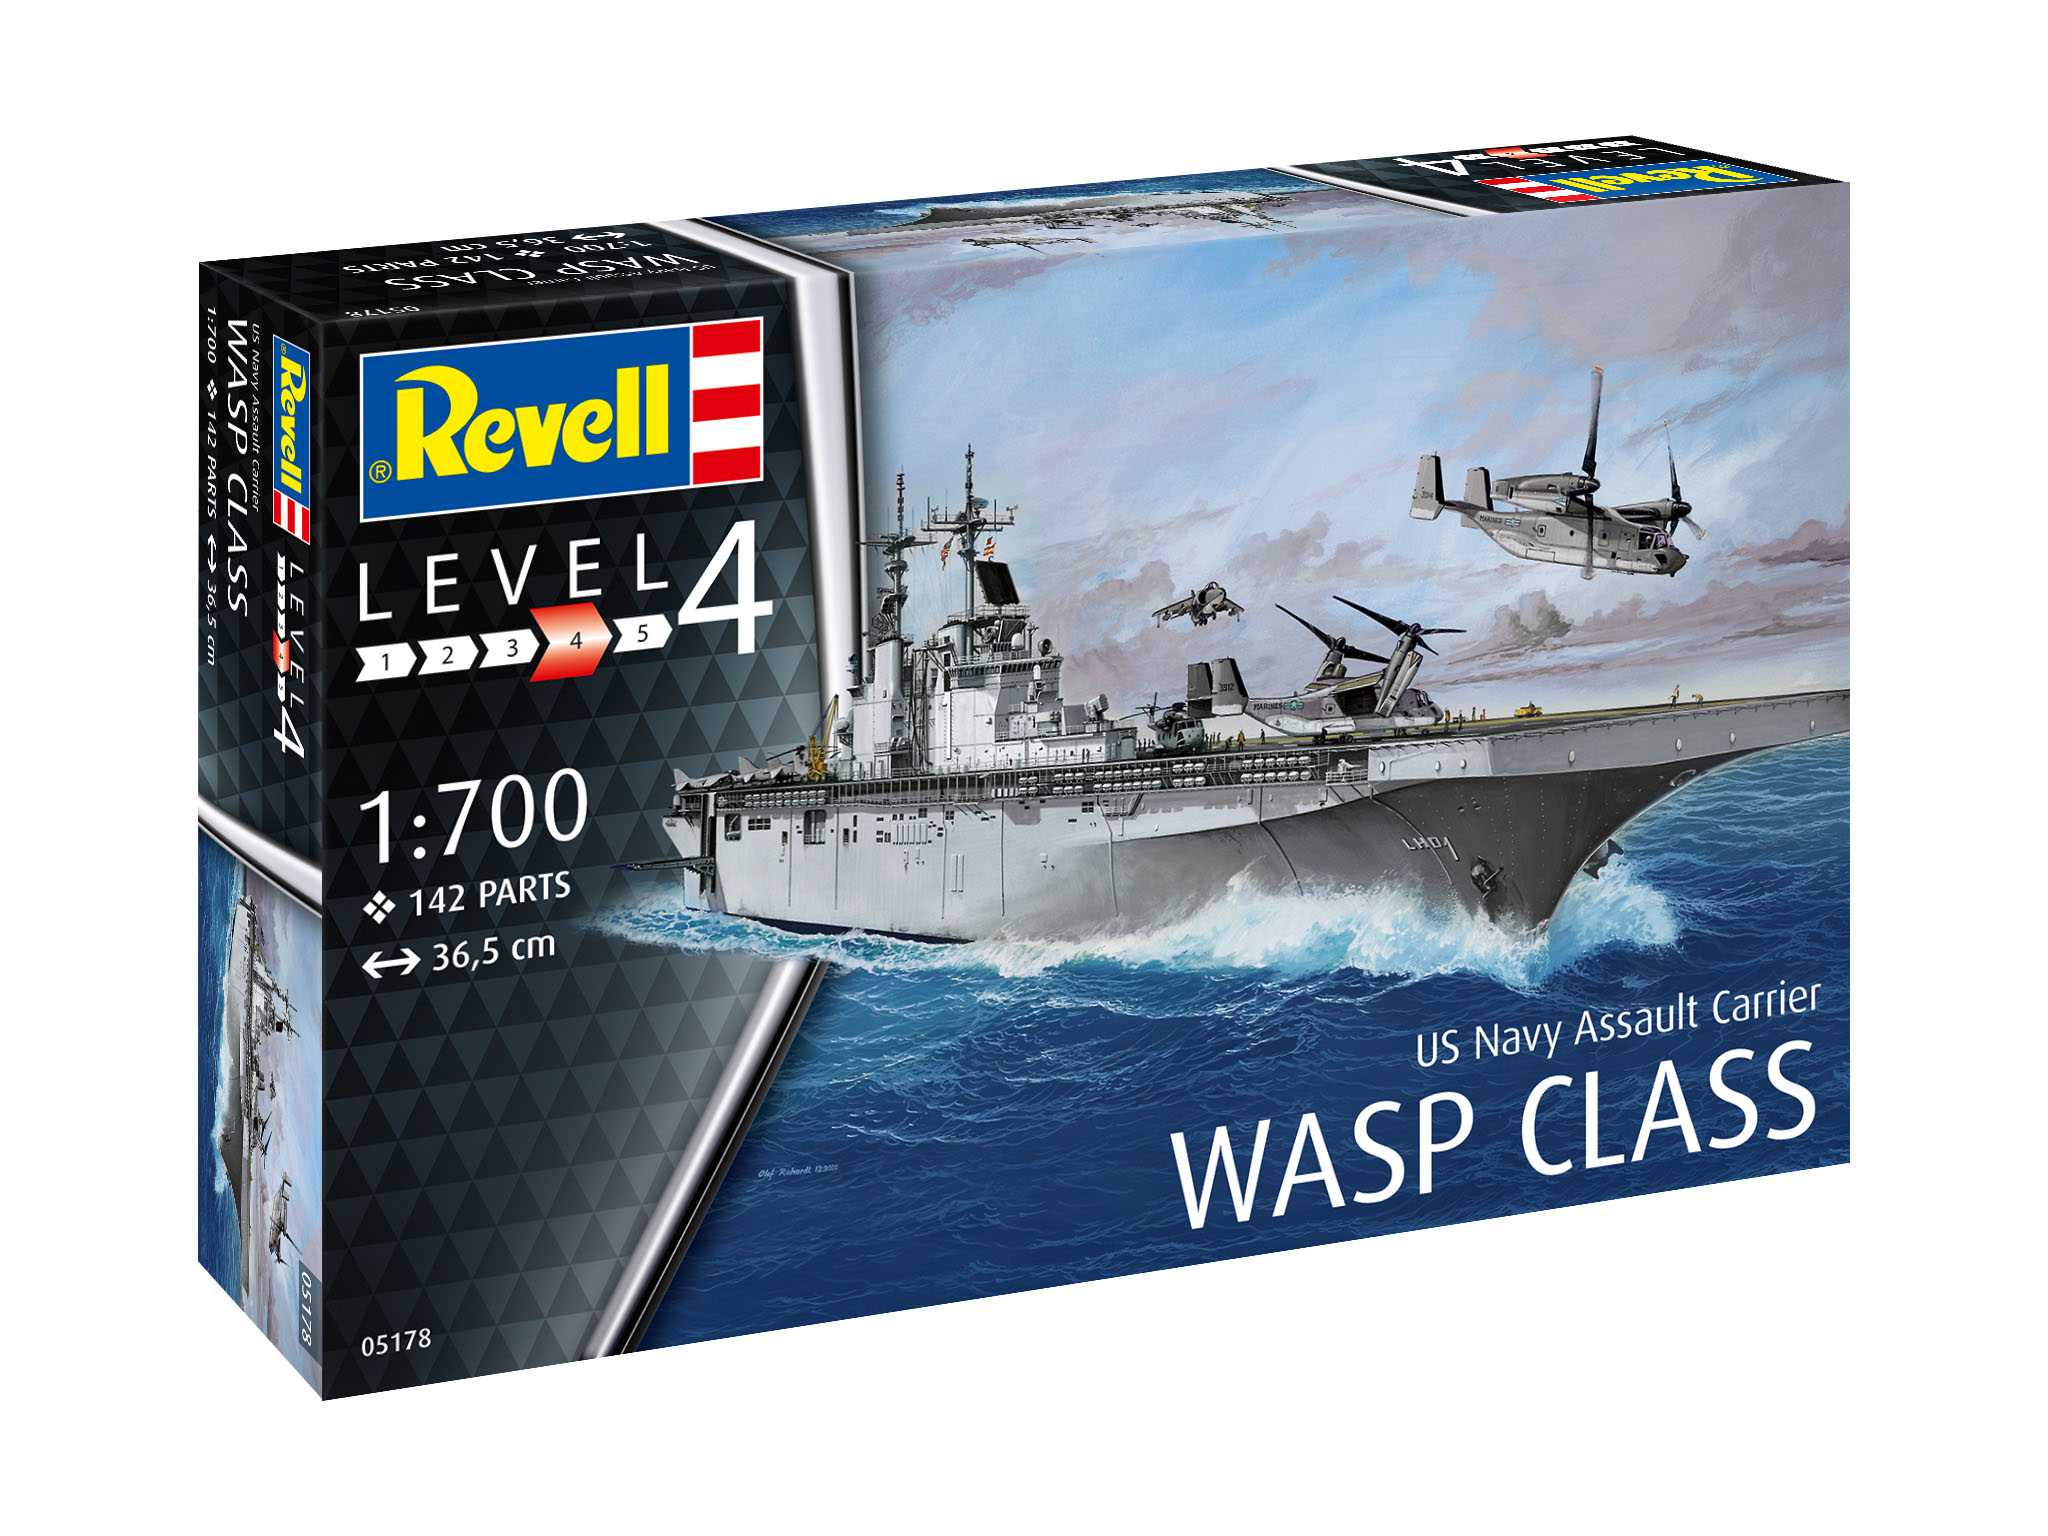 Fotografie Plastic ModelKit loď 05178 - Assault Carrier USS WASP CLASS (1:700)